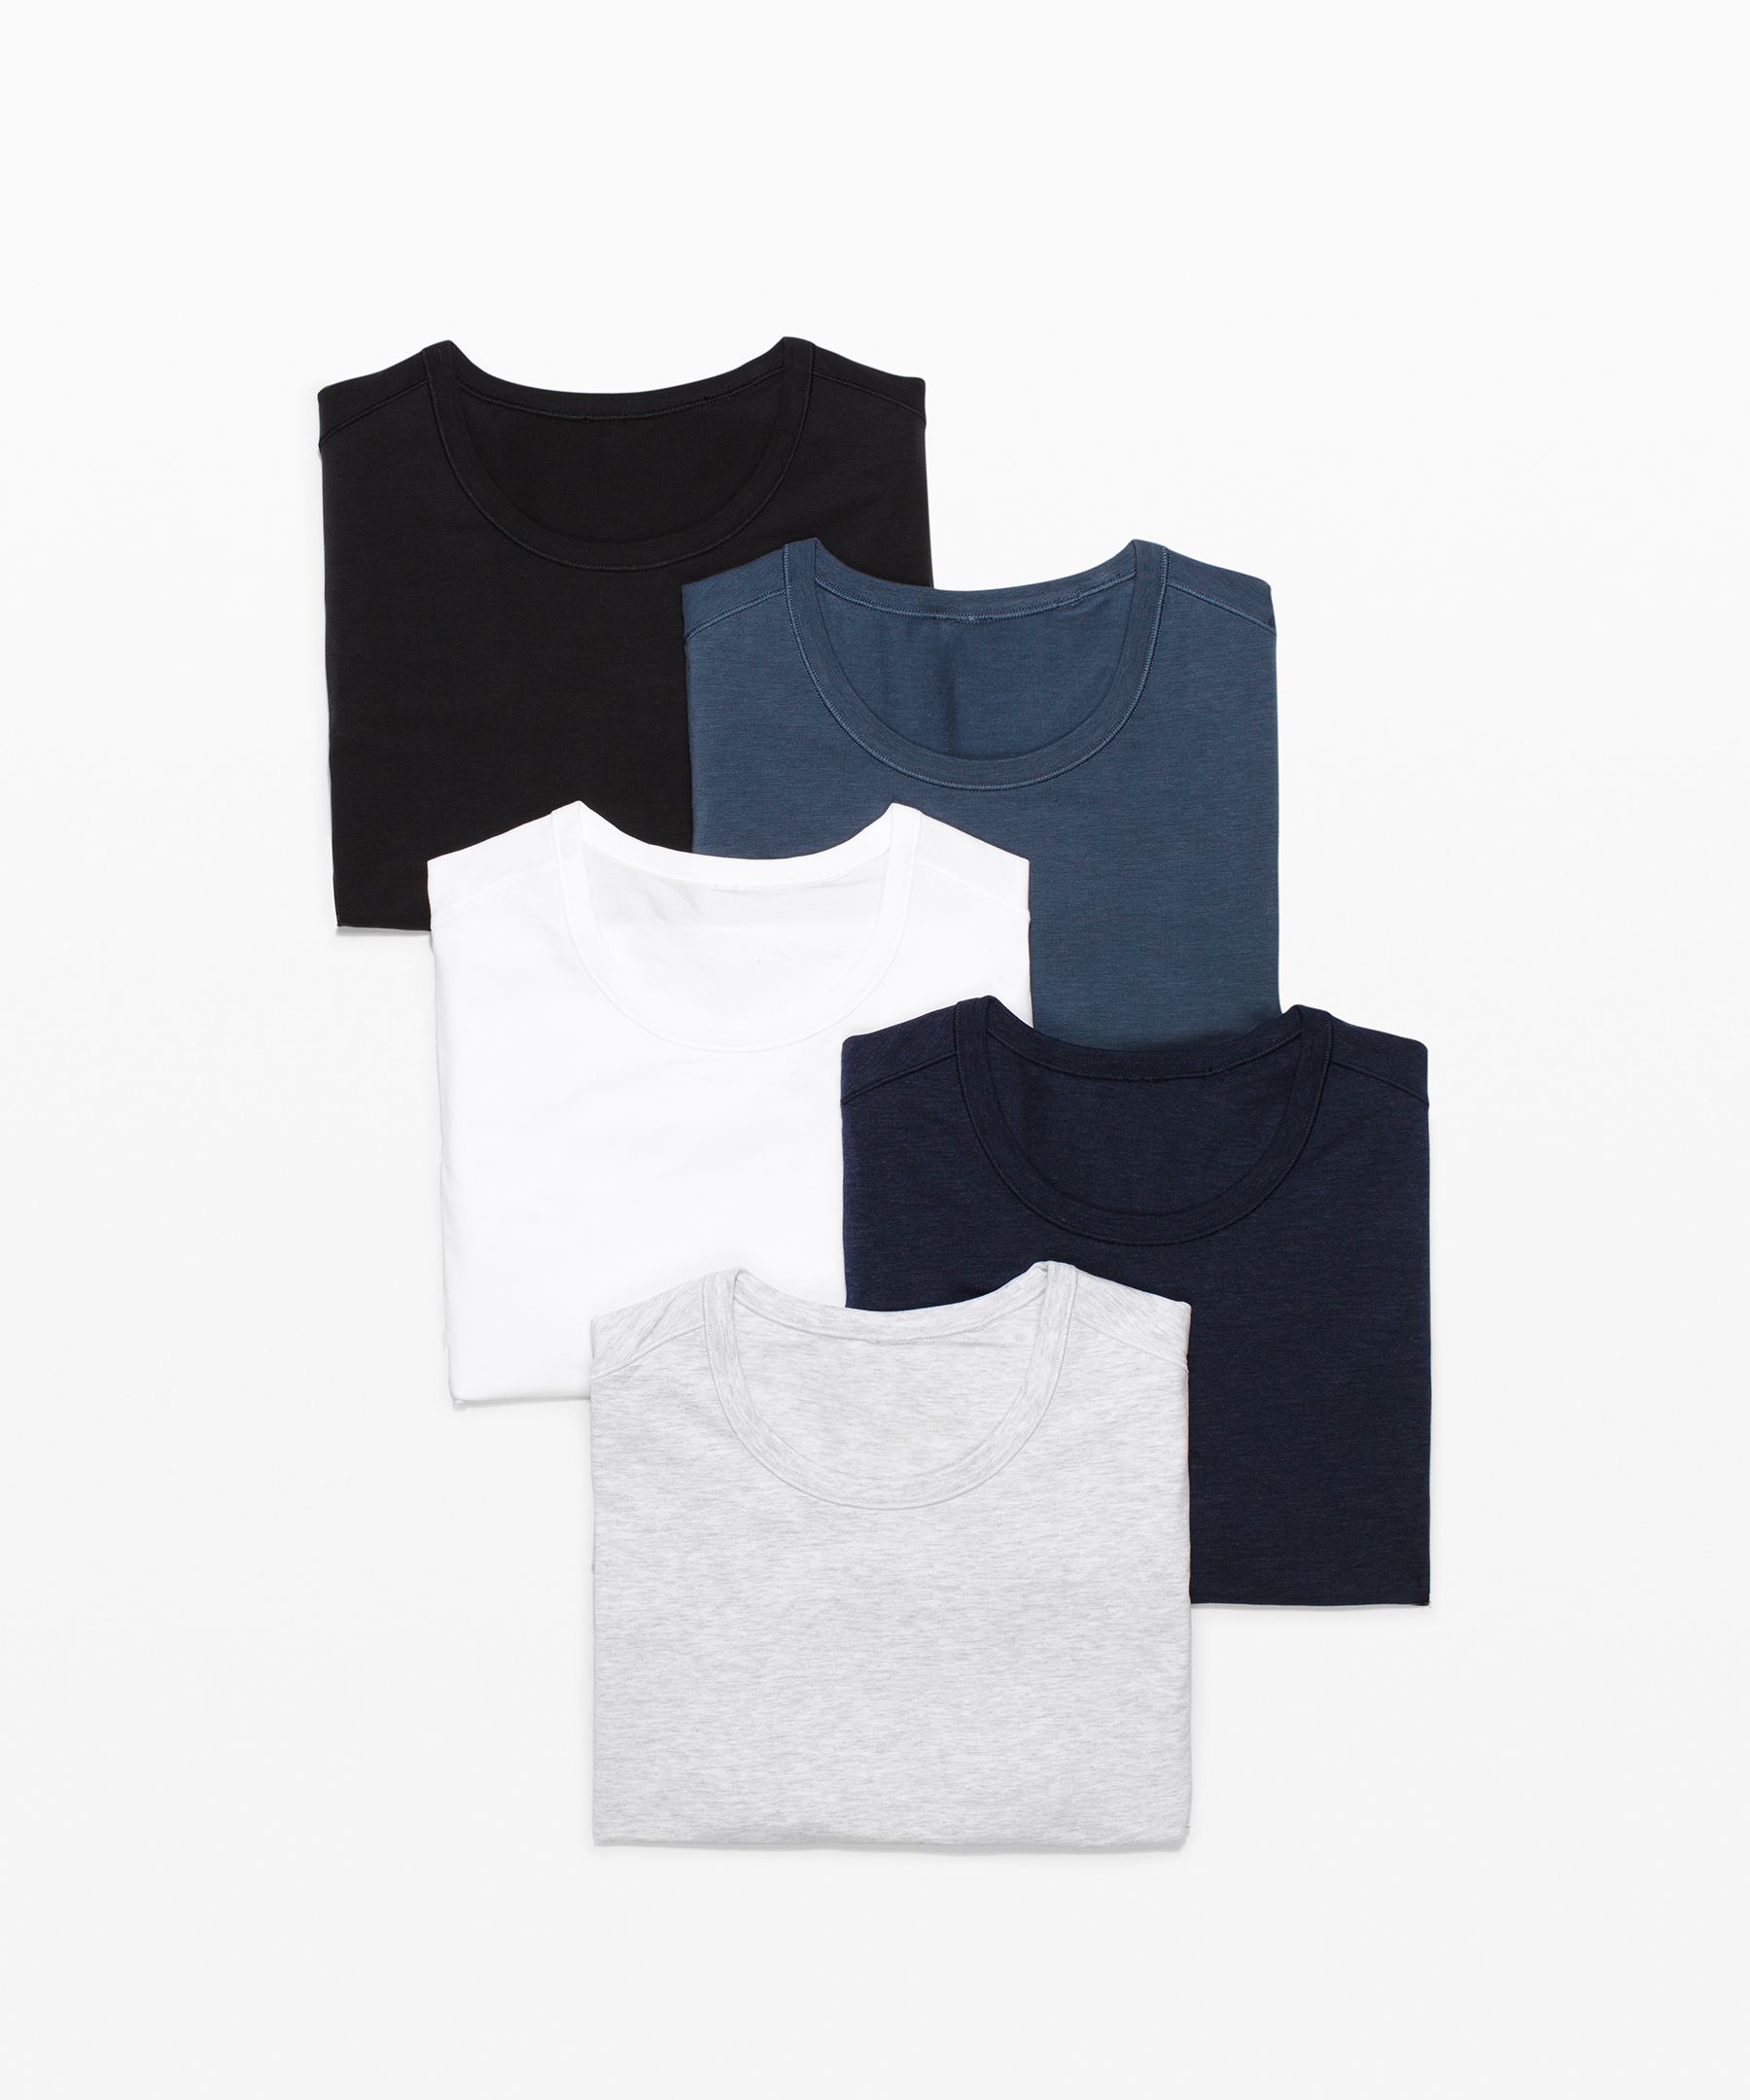 Lululemon 5 Year Basic T-shirt 5 Pack In Black/iron Blue/heathered Core Ultra Light Grey